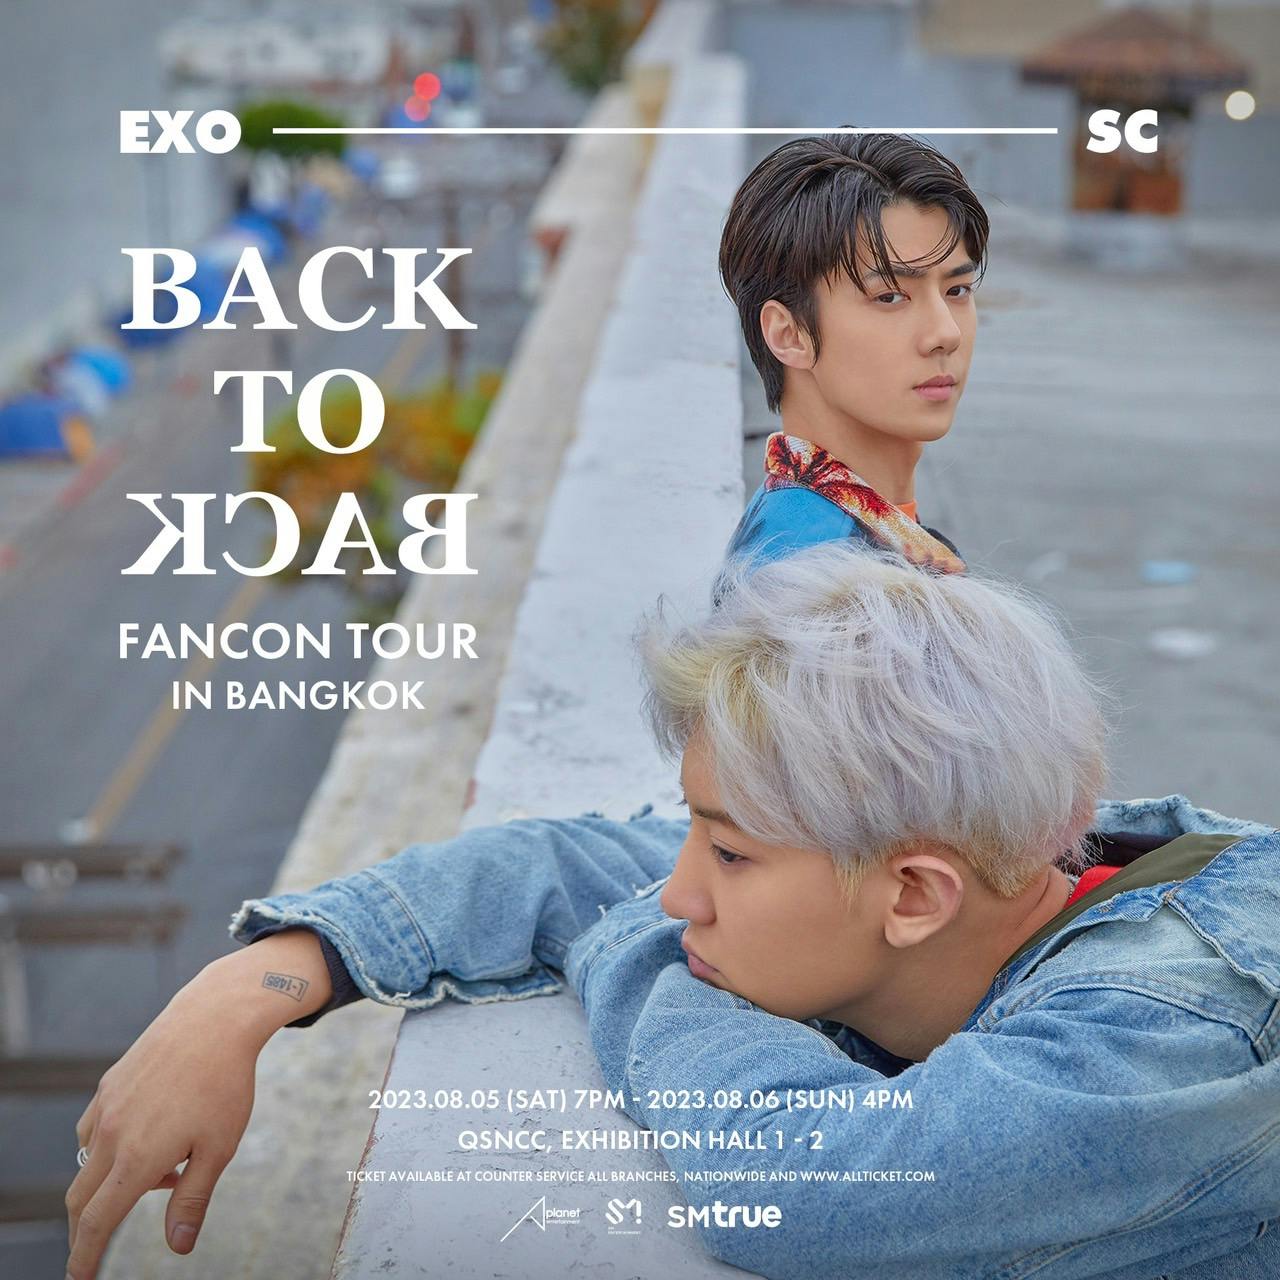 EXO-SC BACK TO BACK FANCON IN BANGKOK